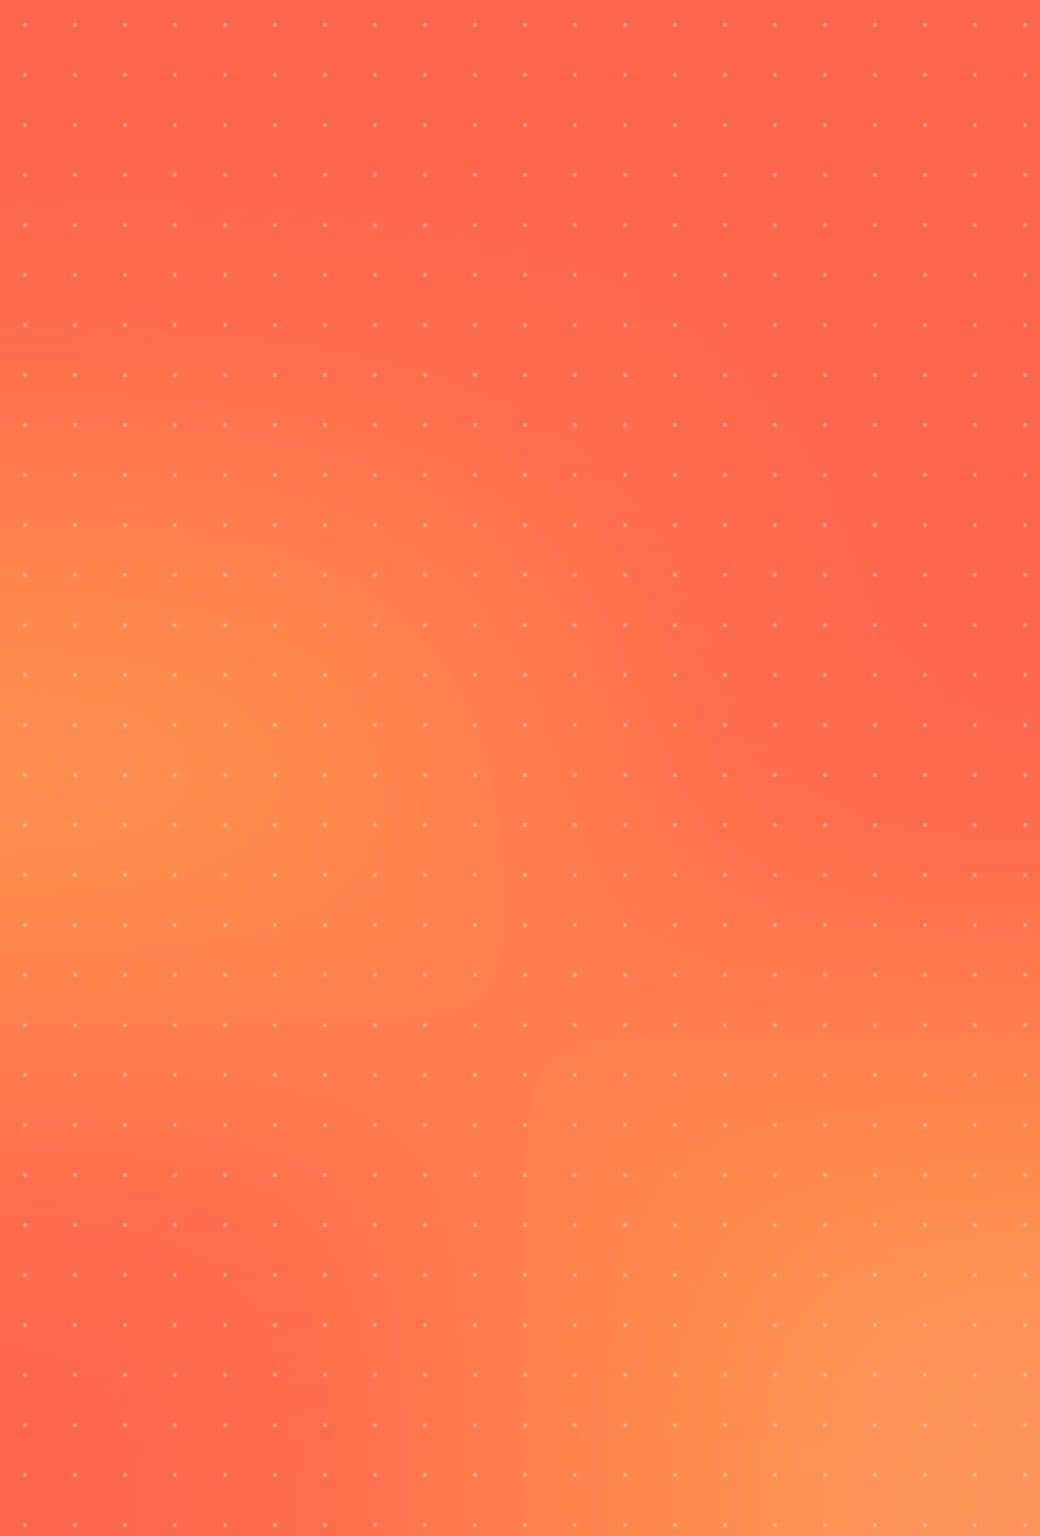 Burnt Orange Gradient Background Wallpaper